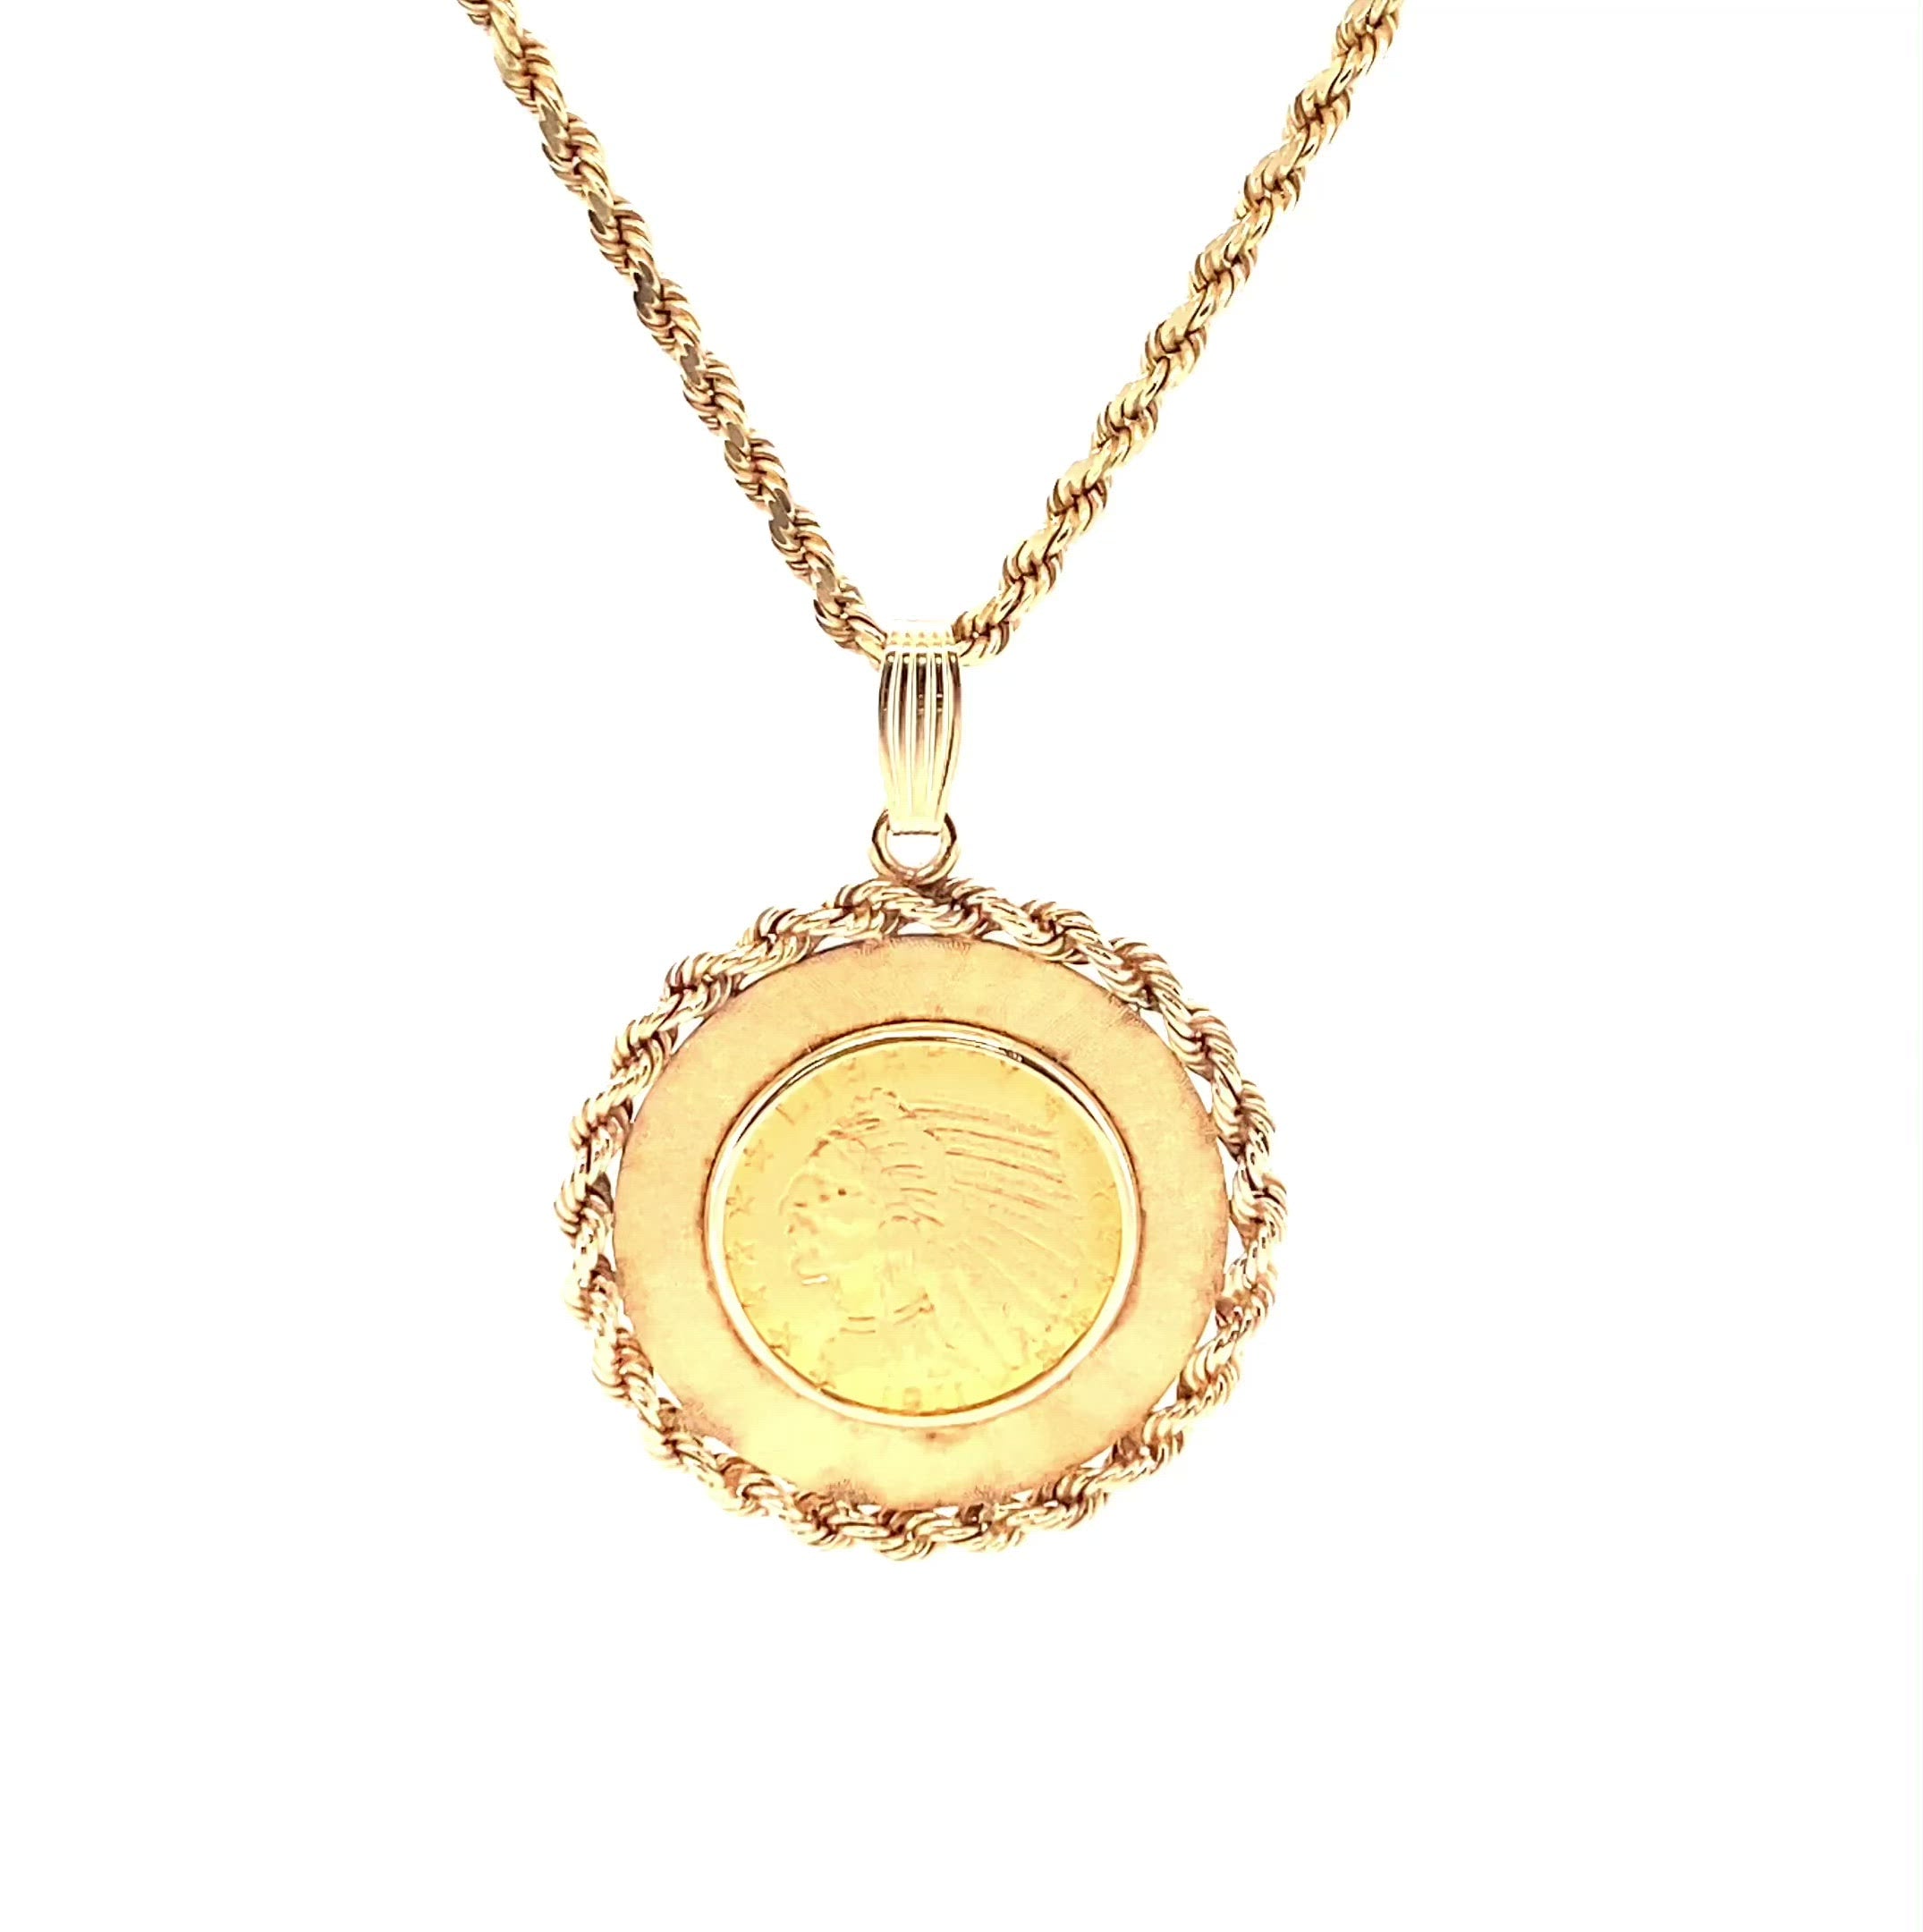 14k Yellow Gold Roman Coin Pendant Necklace, 18